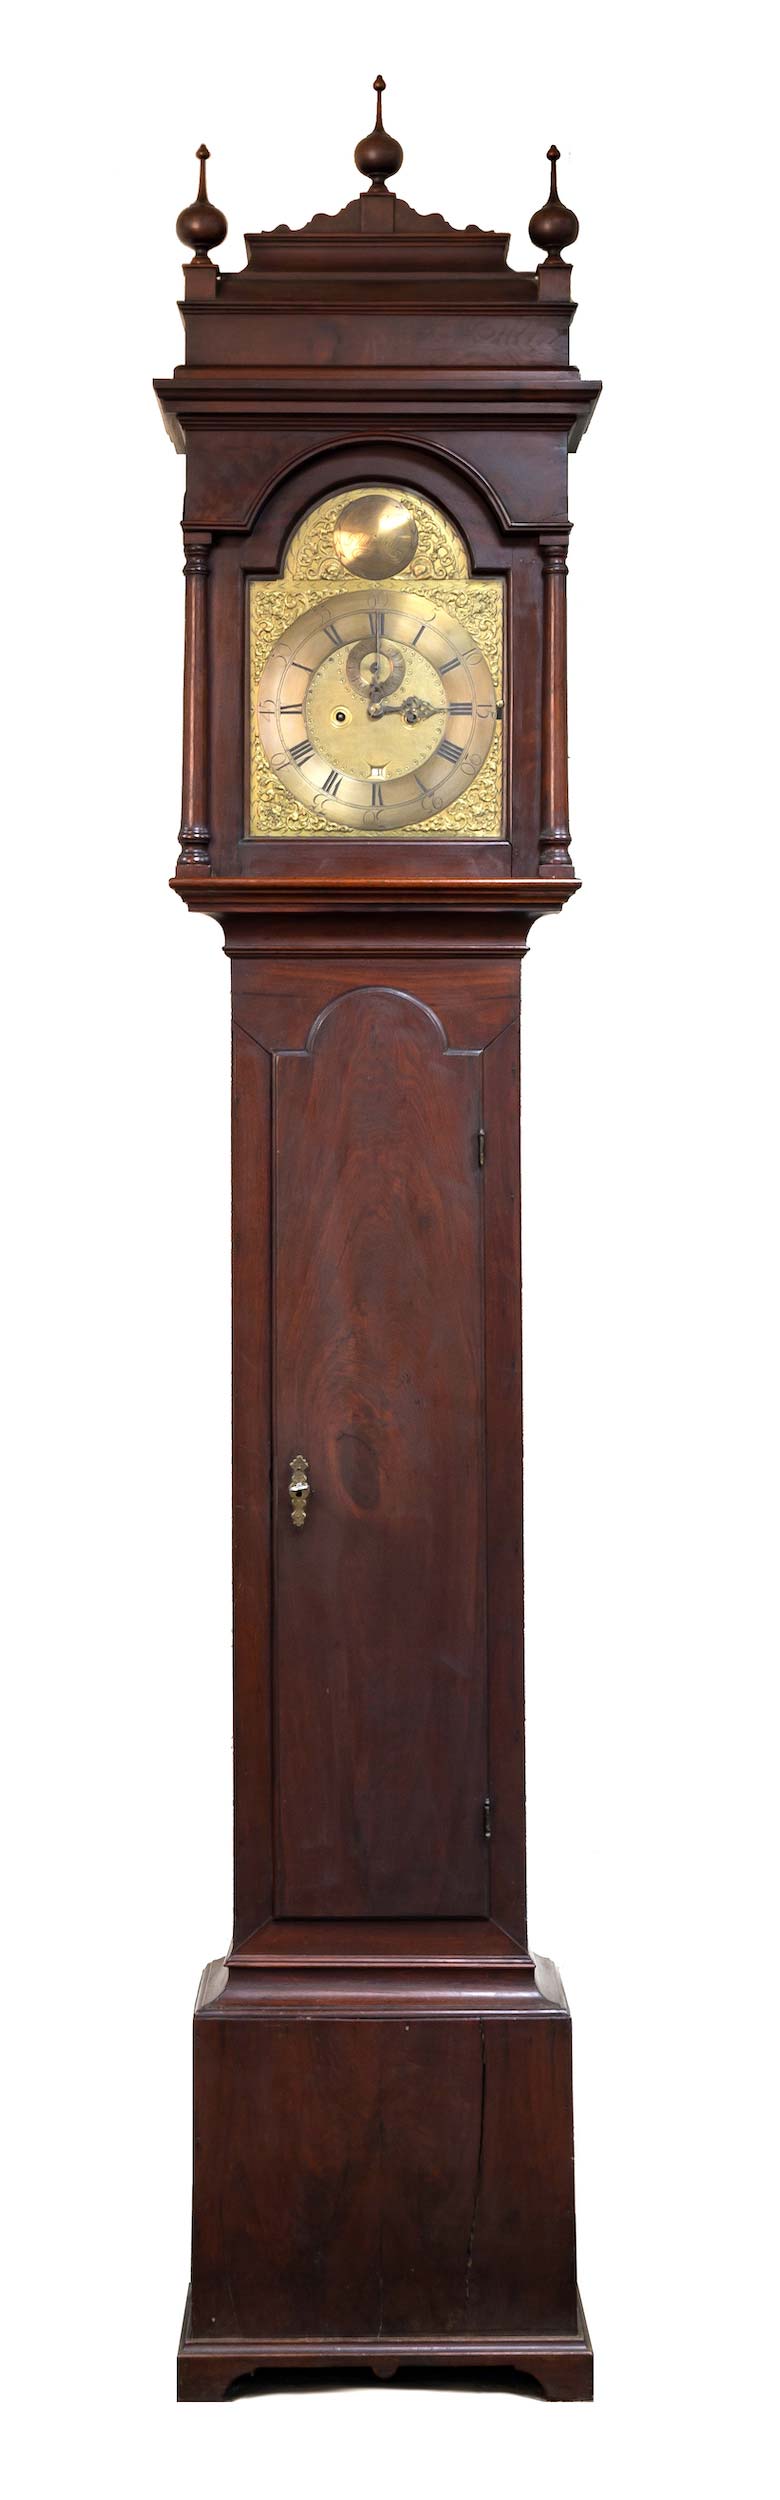 Joseph Wills Philadelphia Queen Anne Tall Case Clock, $15,000-$25,000